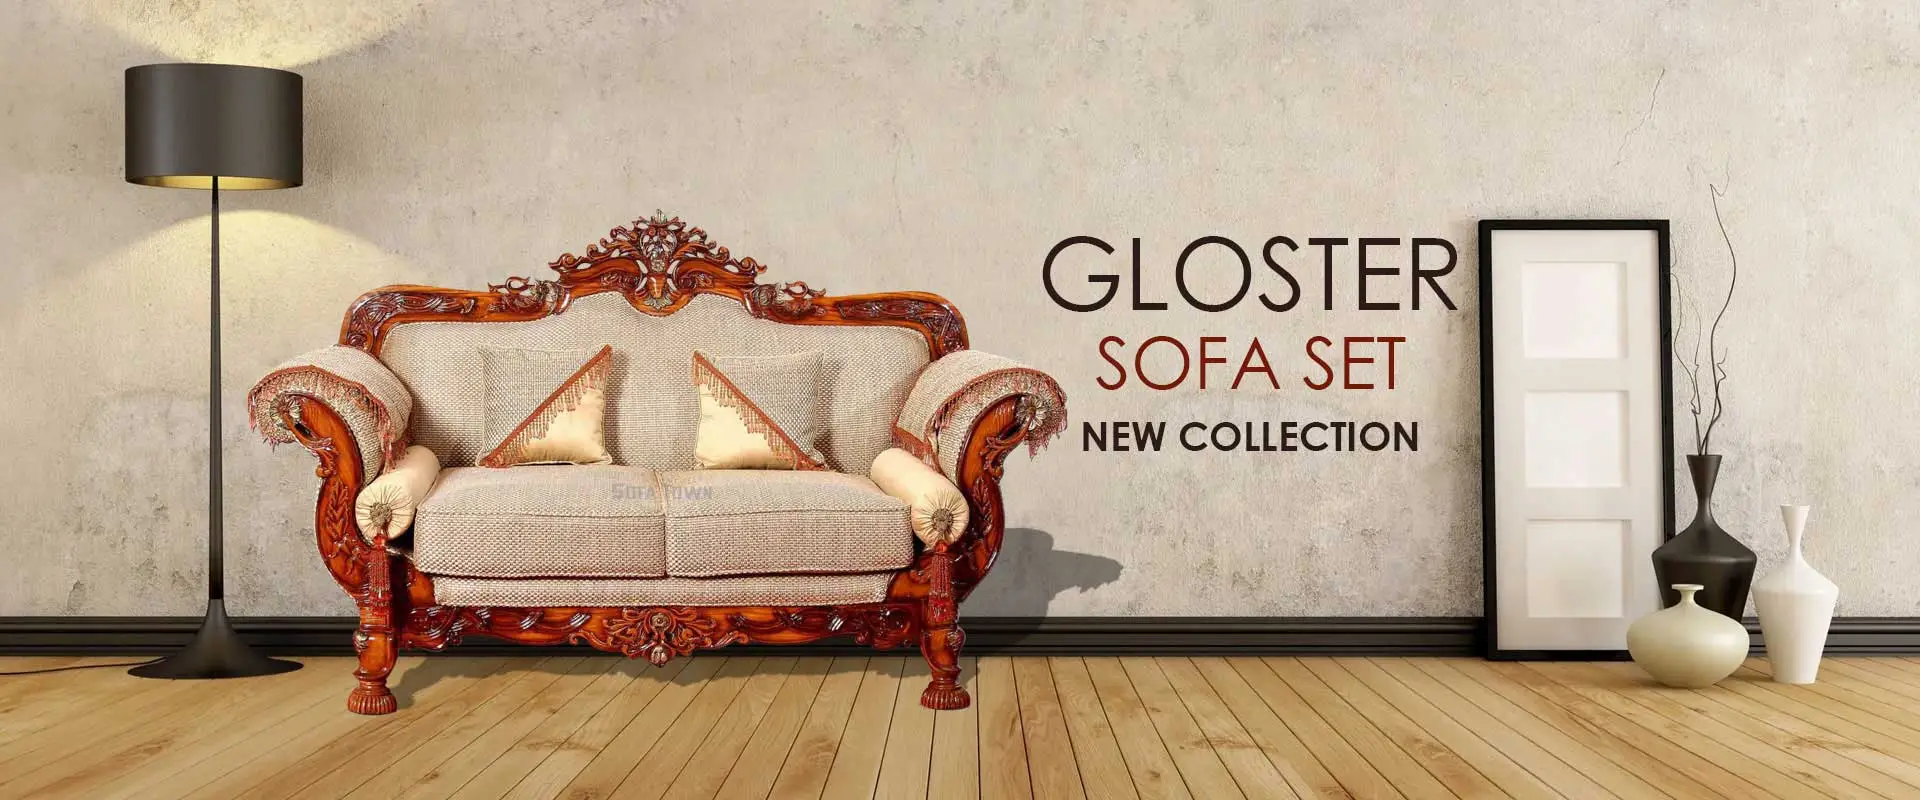 Gloster Sofa Set  Manufacturers in Anantnag